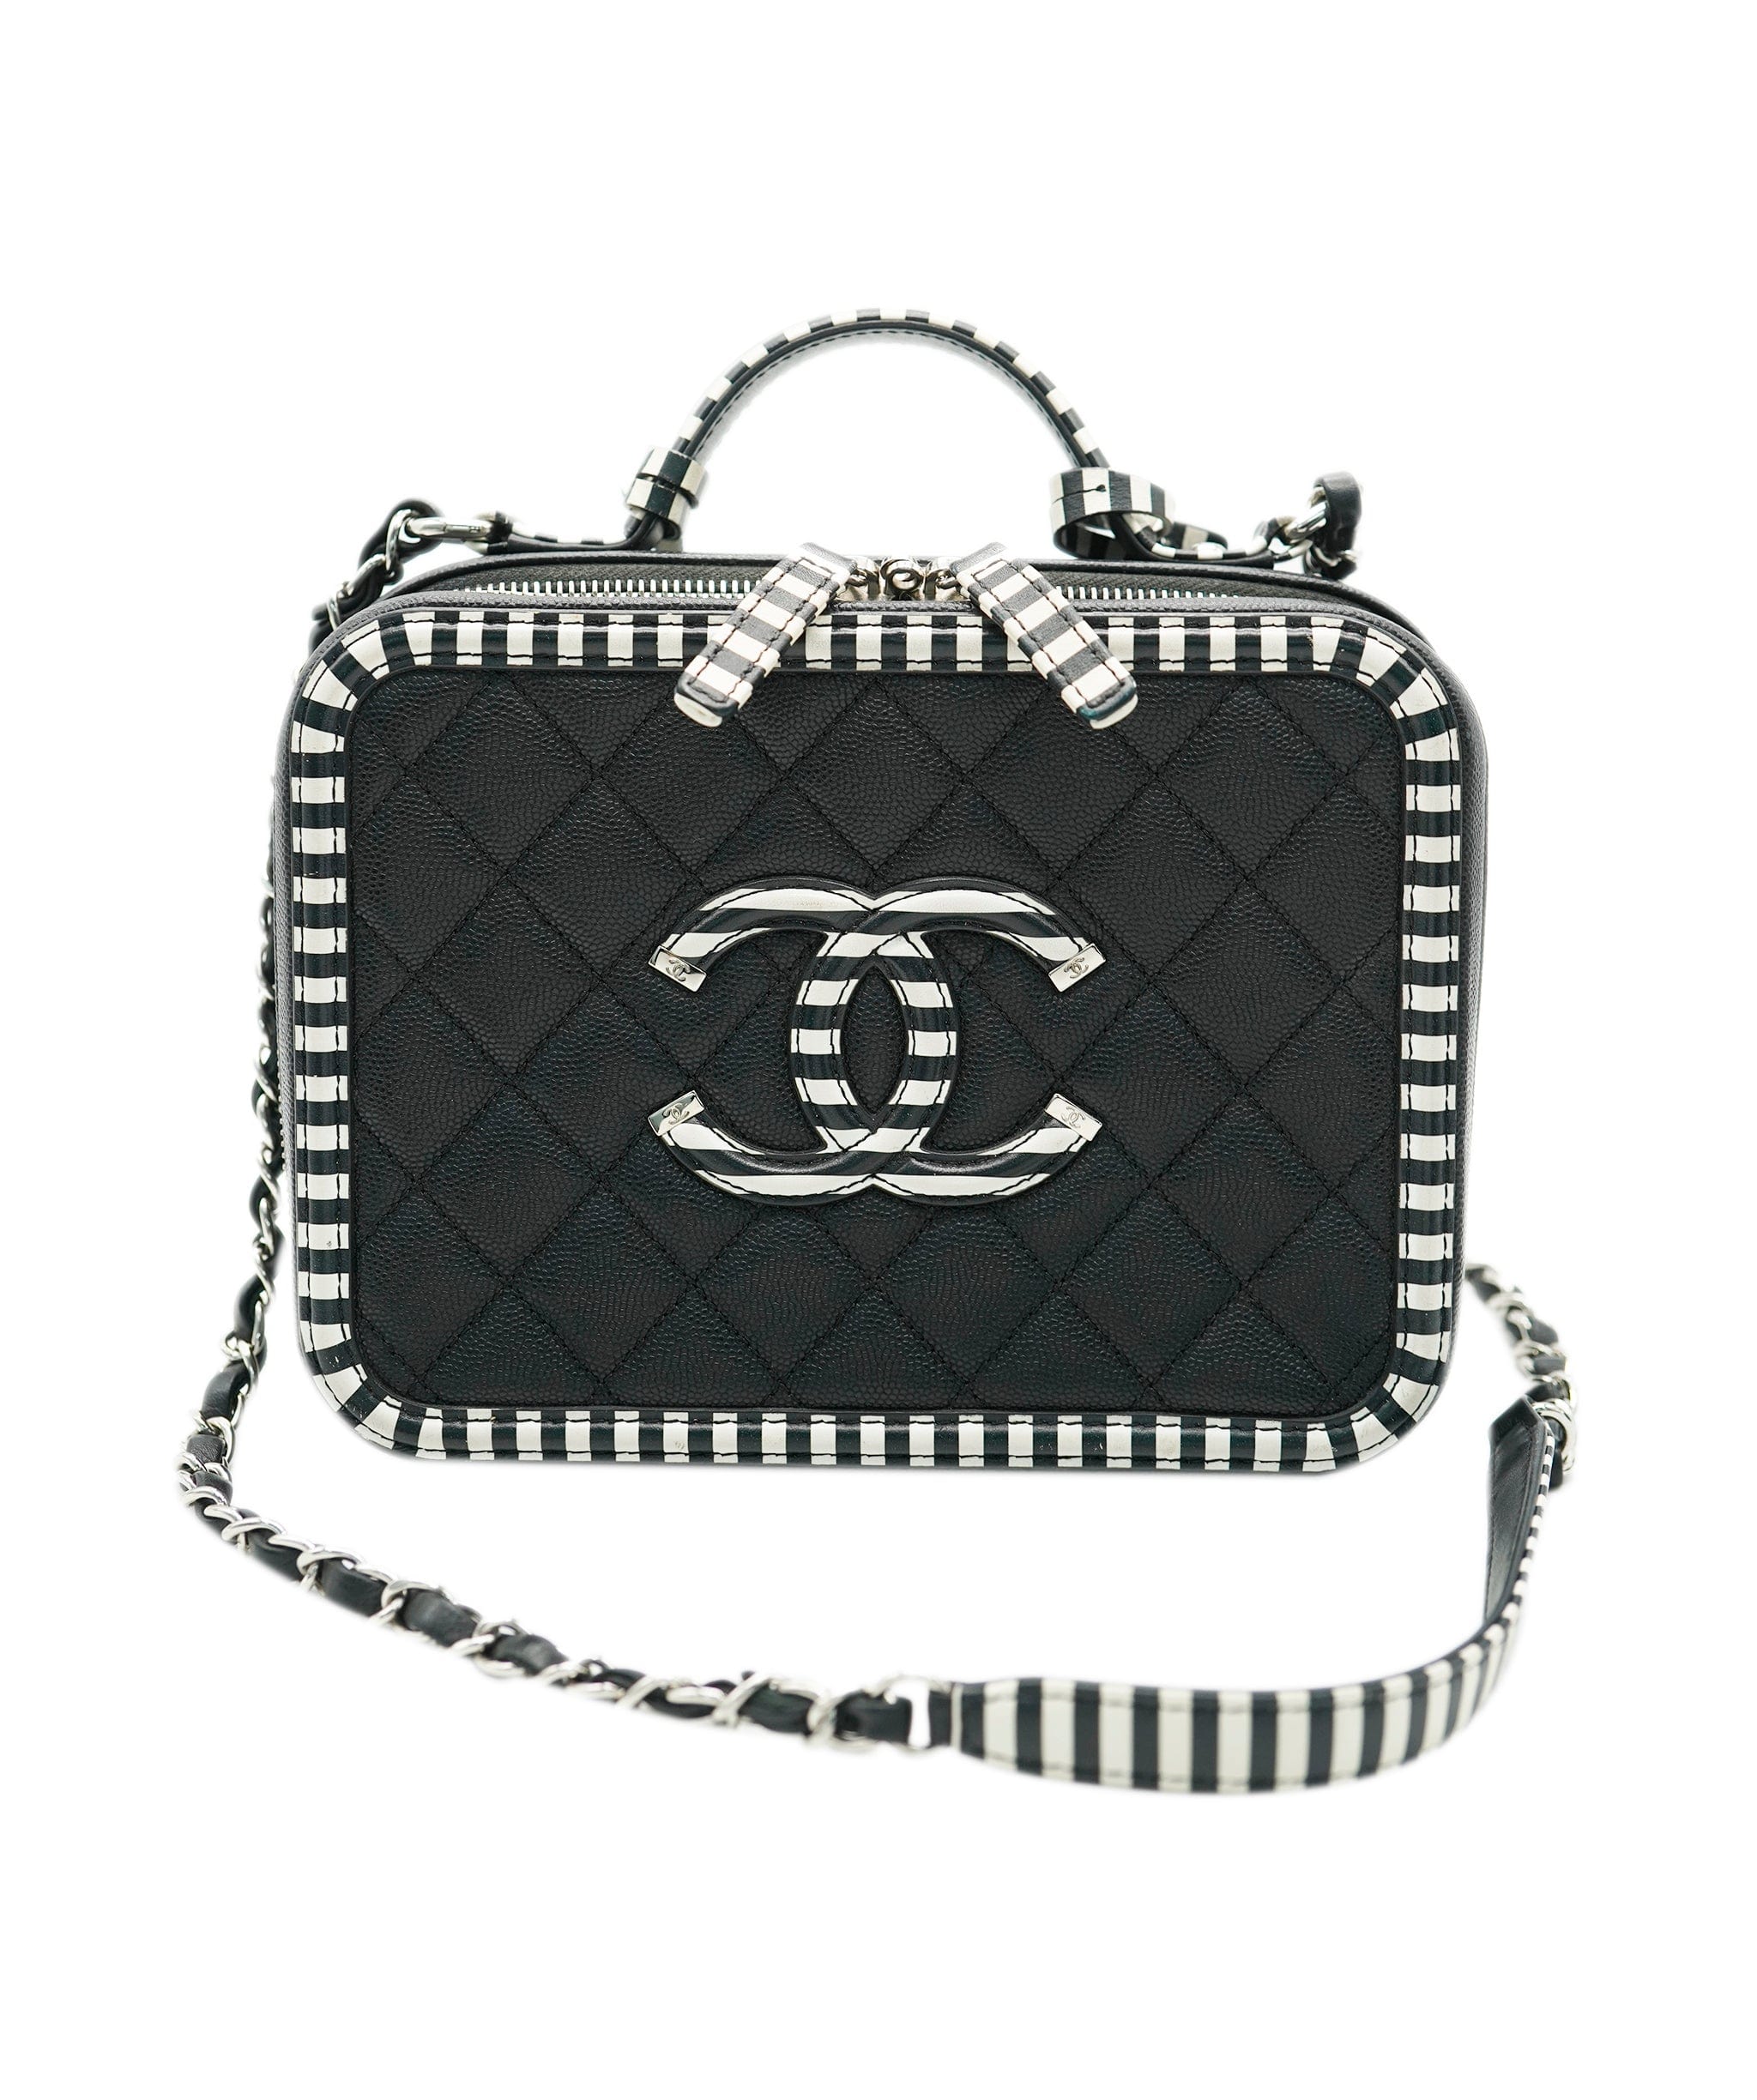 Chanel Chanel vanity box bag black and white stripes AVC1958